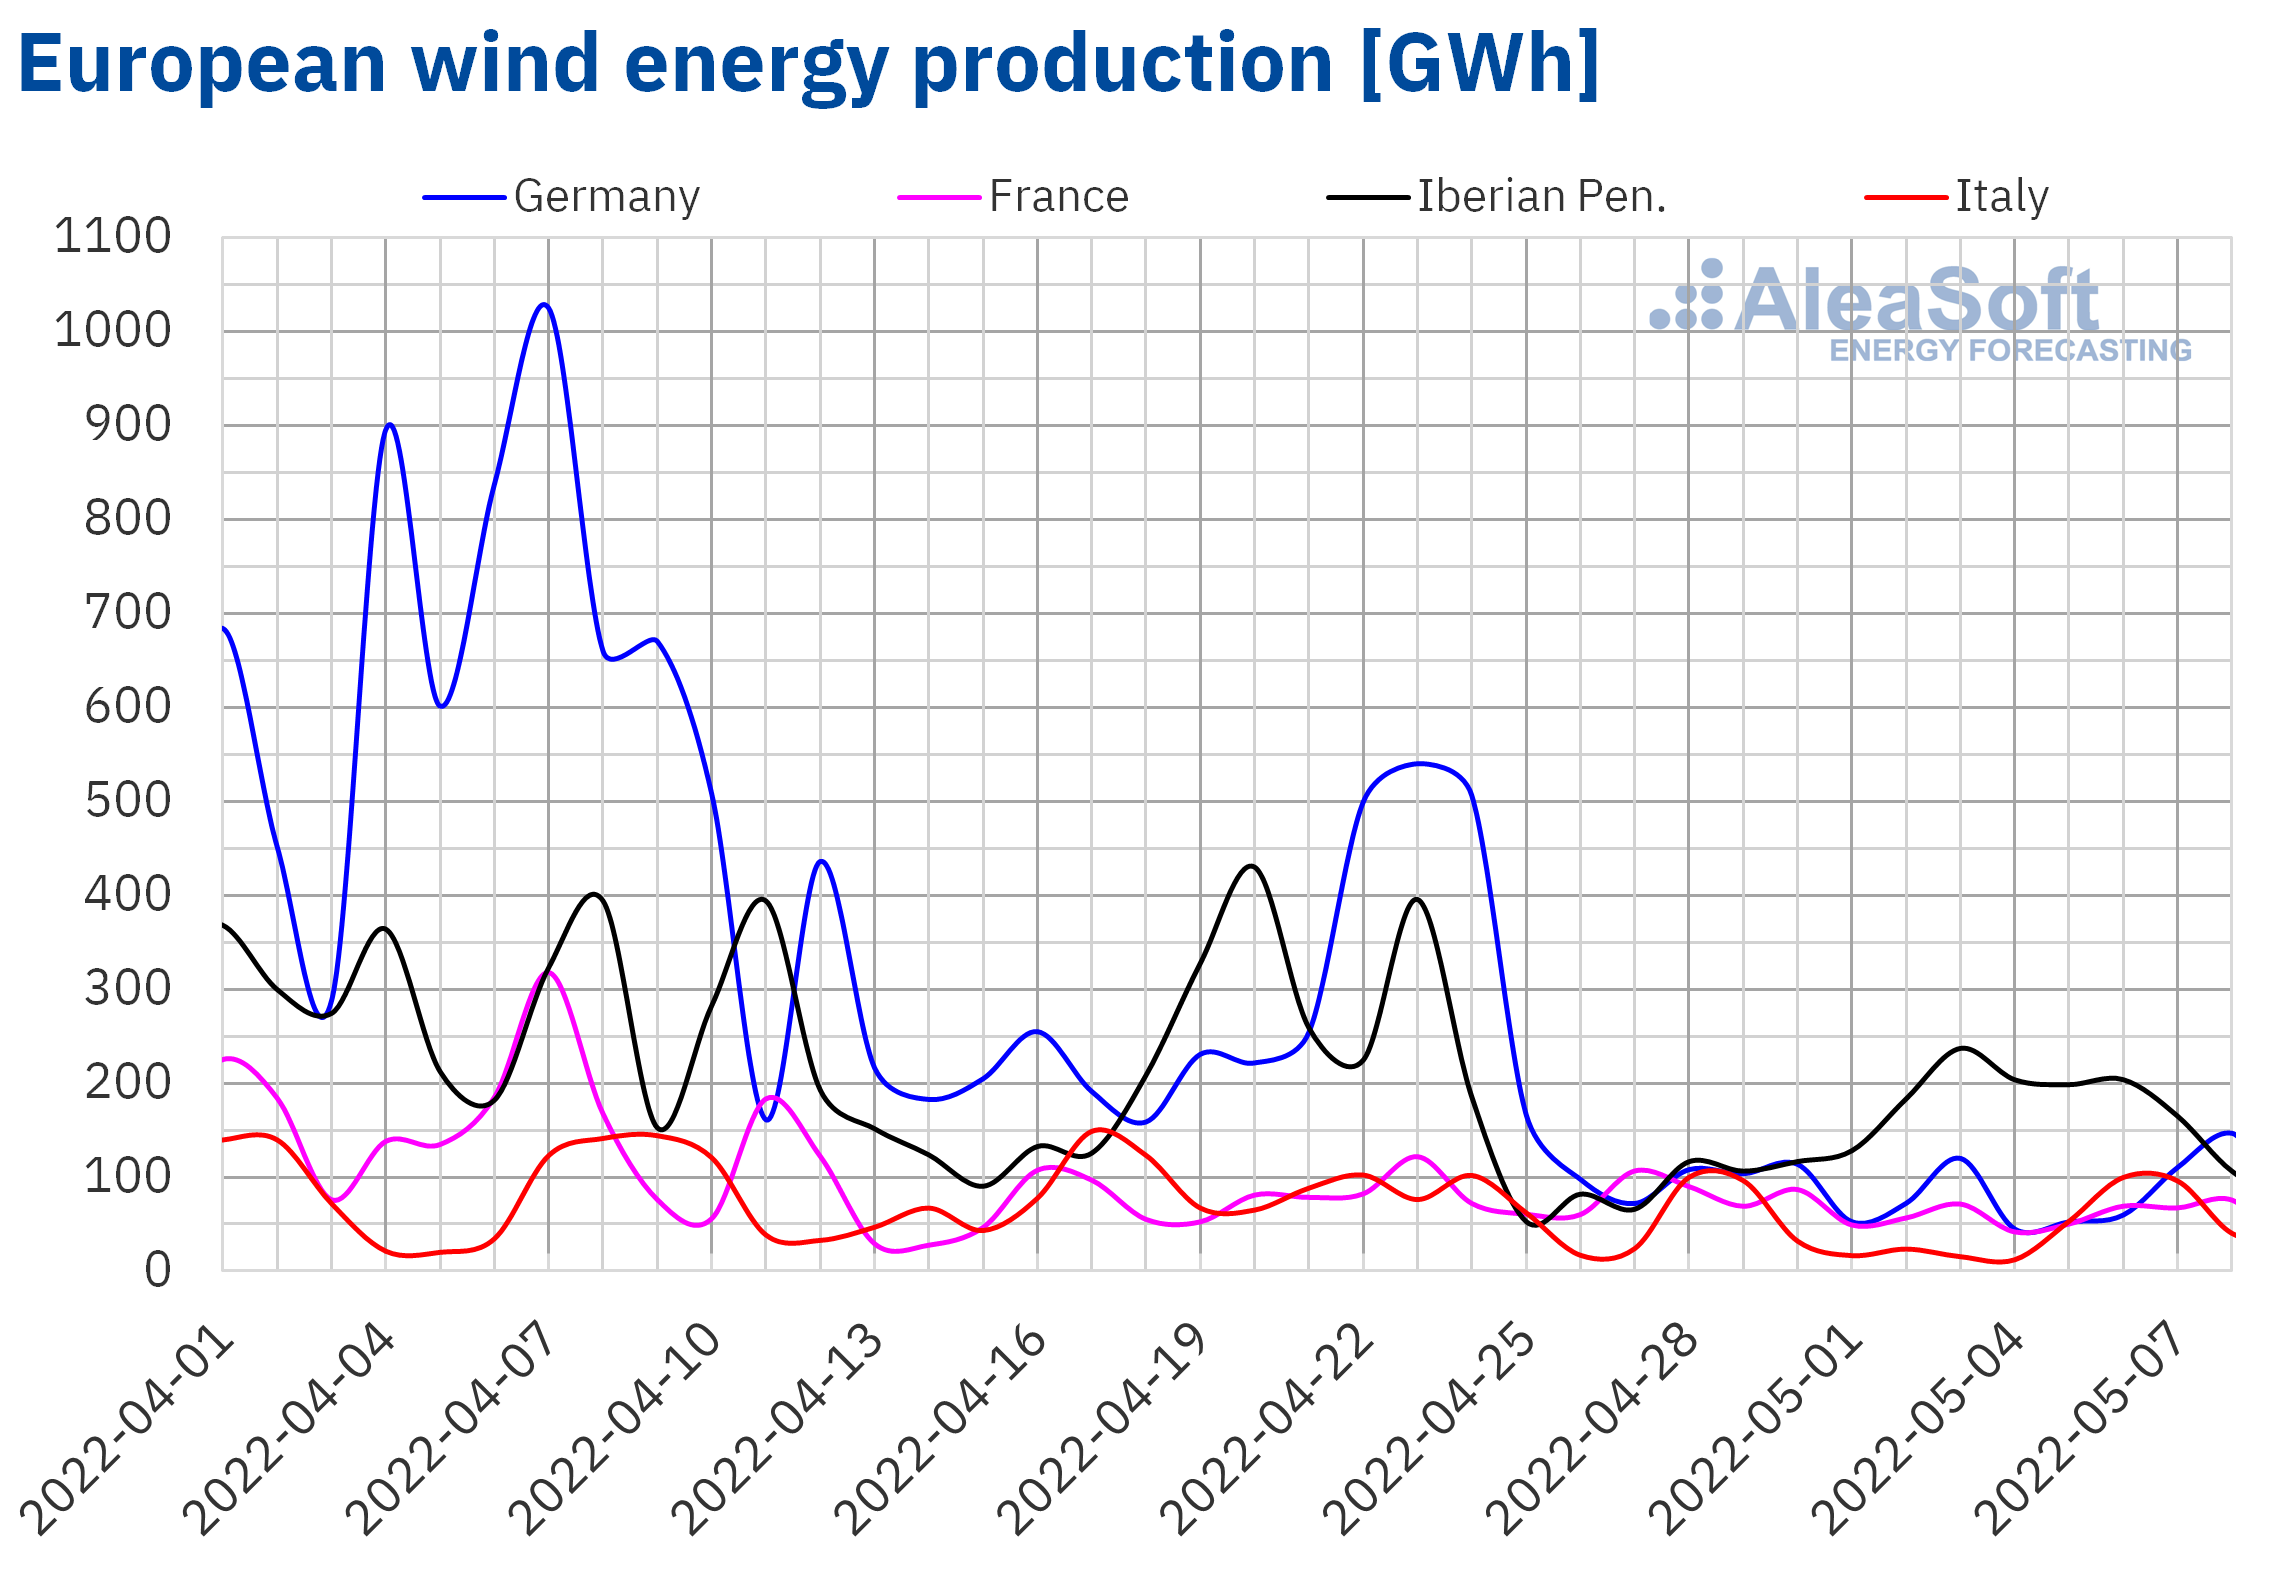 AleaSoft - Wind energy production electricity Europe